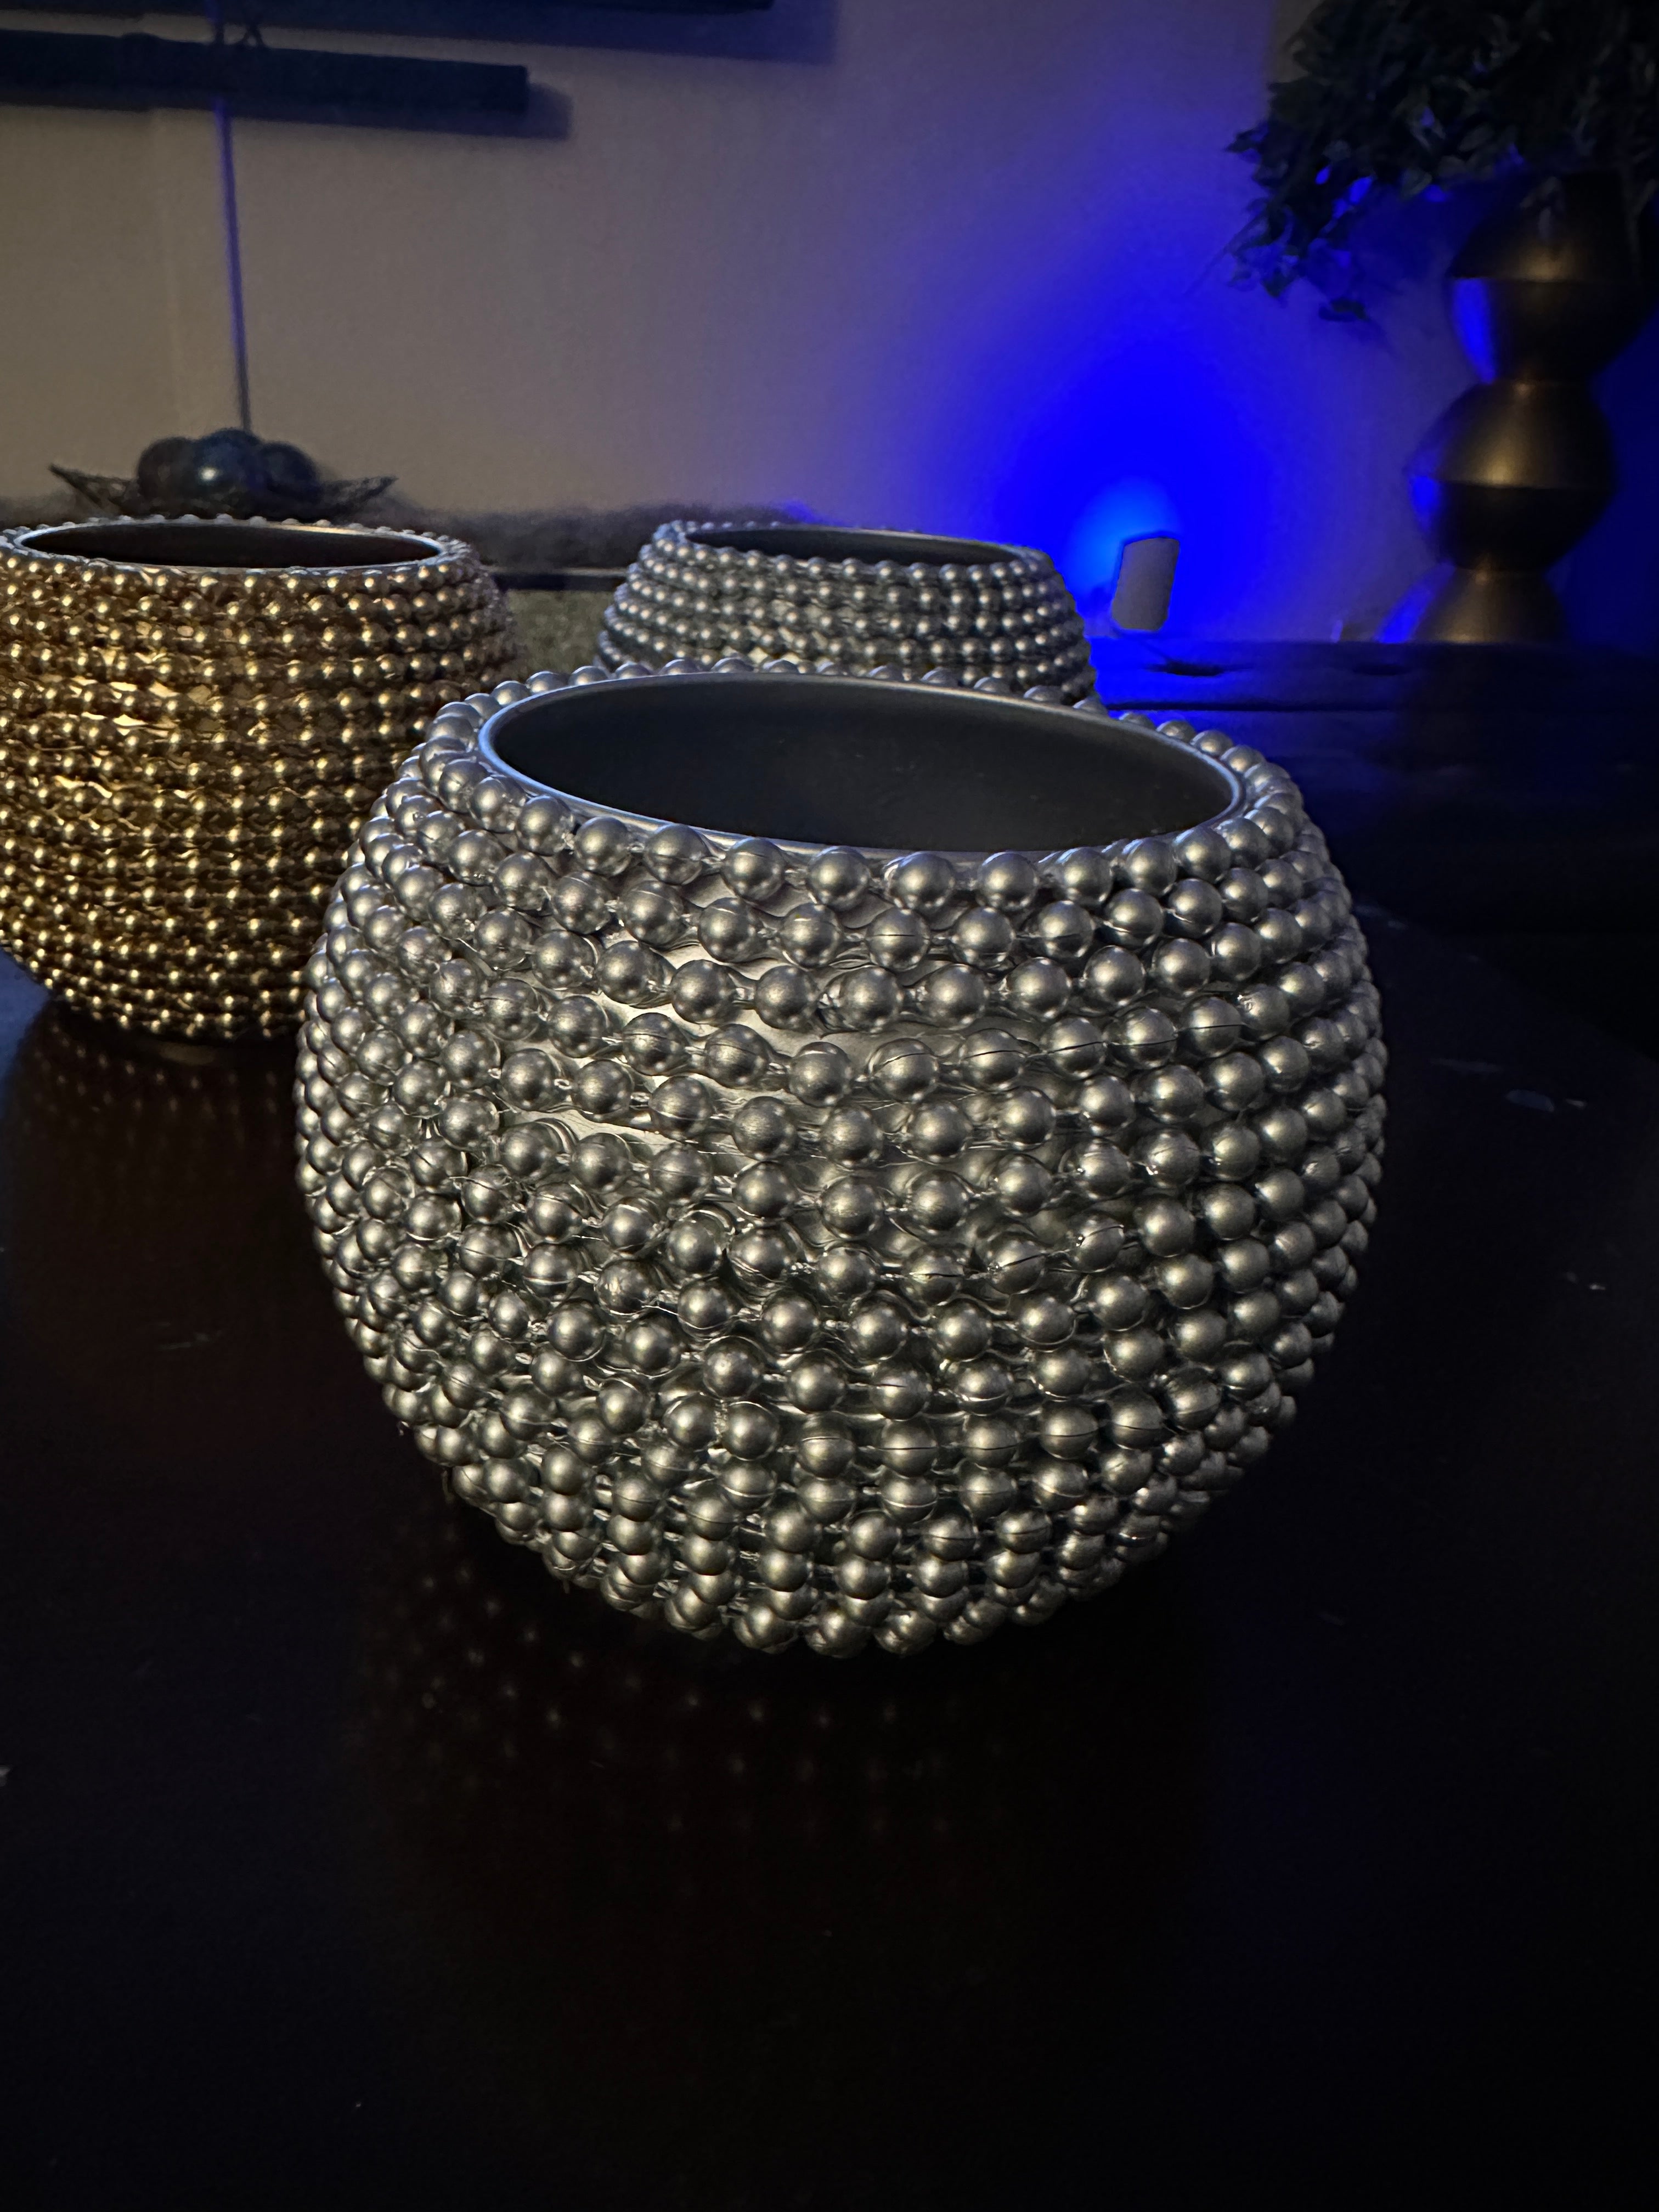 Glass Candle Vessels (Handmade)